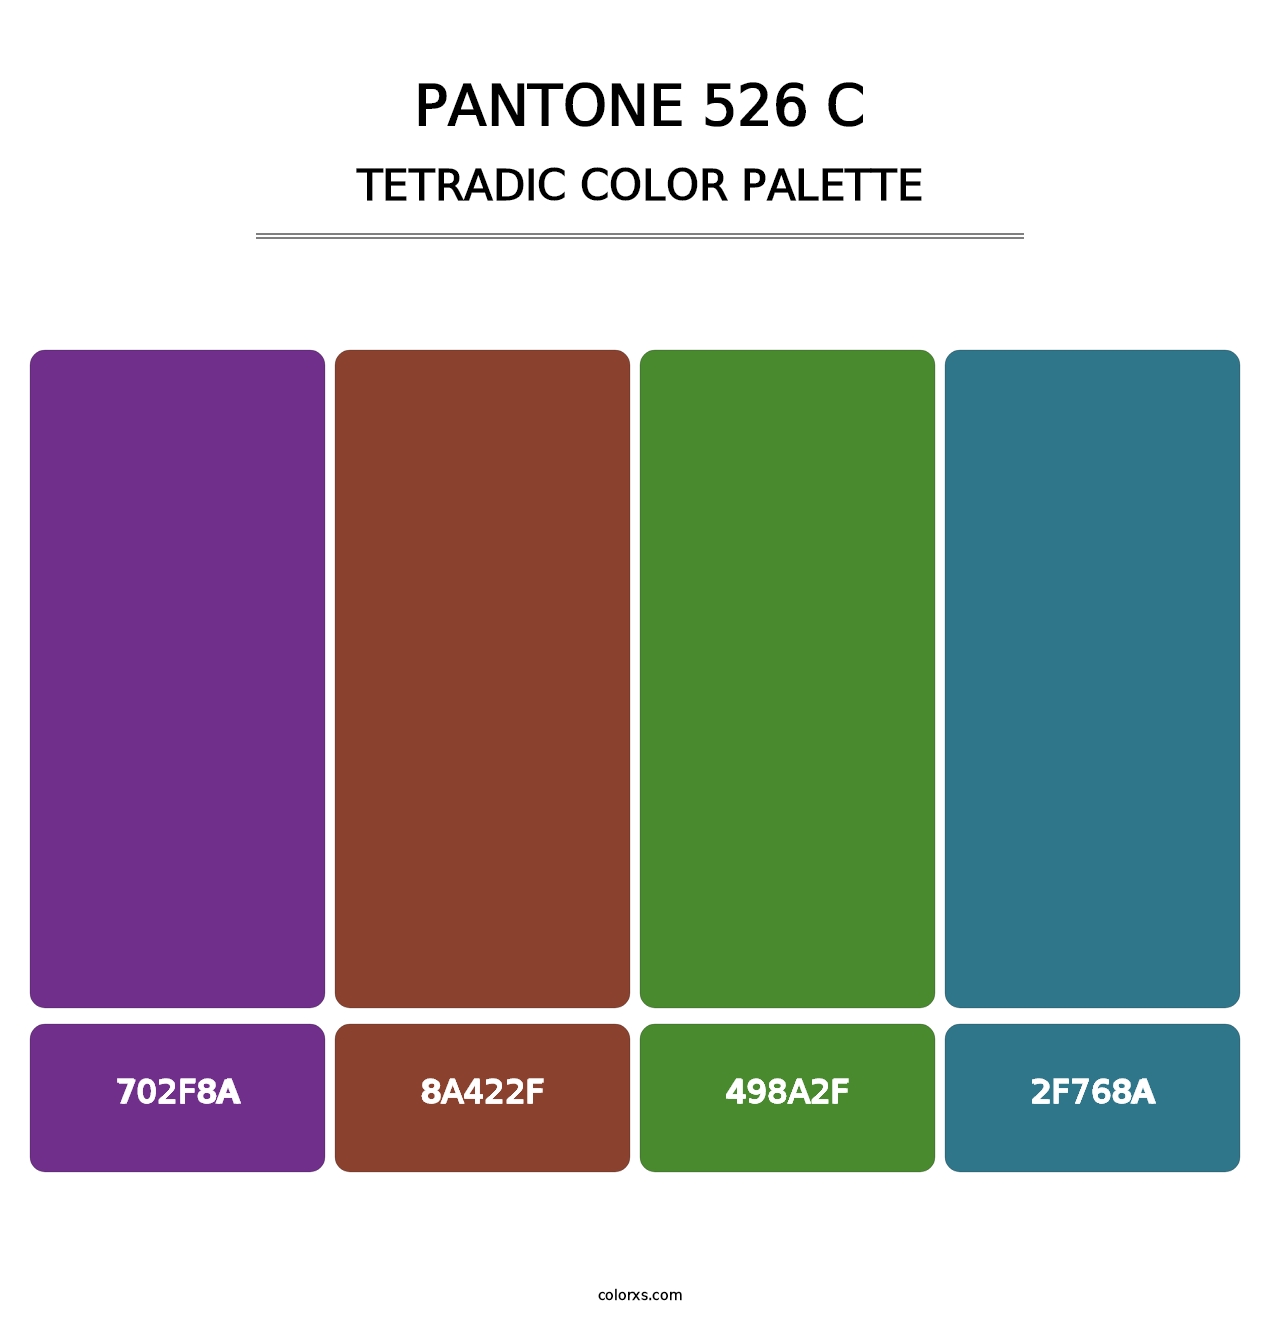 PANTONE 526 C - Tetradic Color Palette